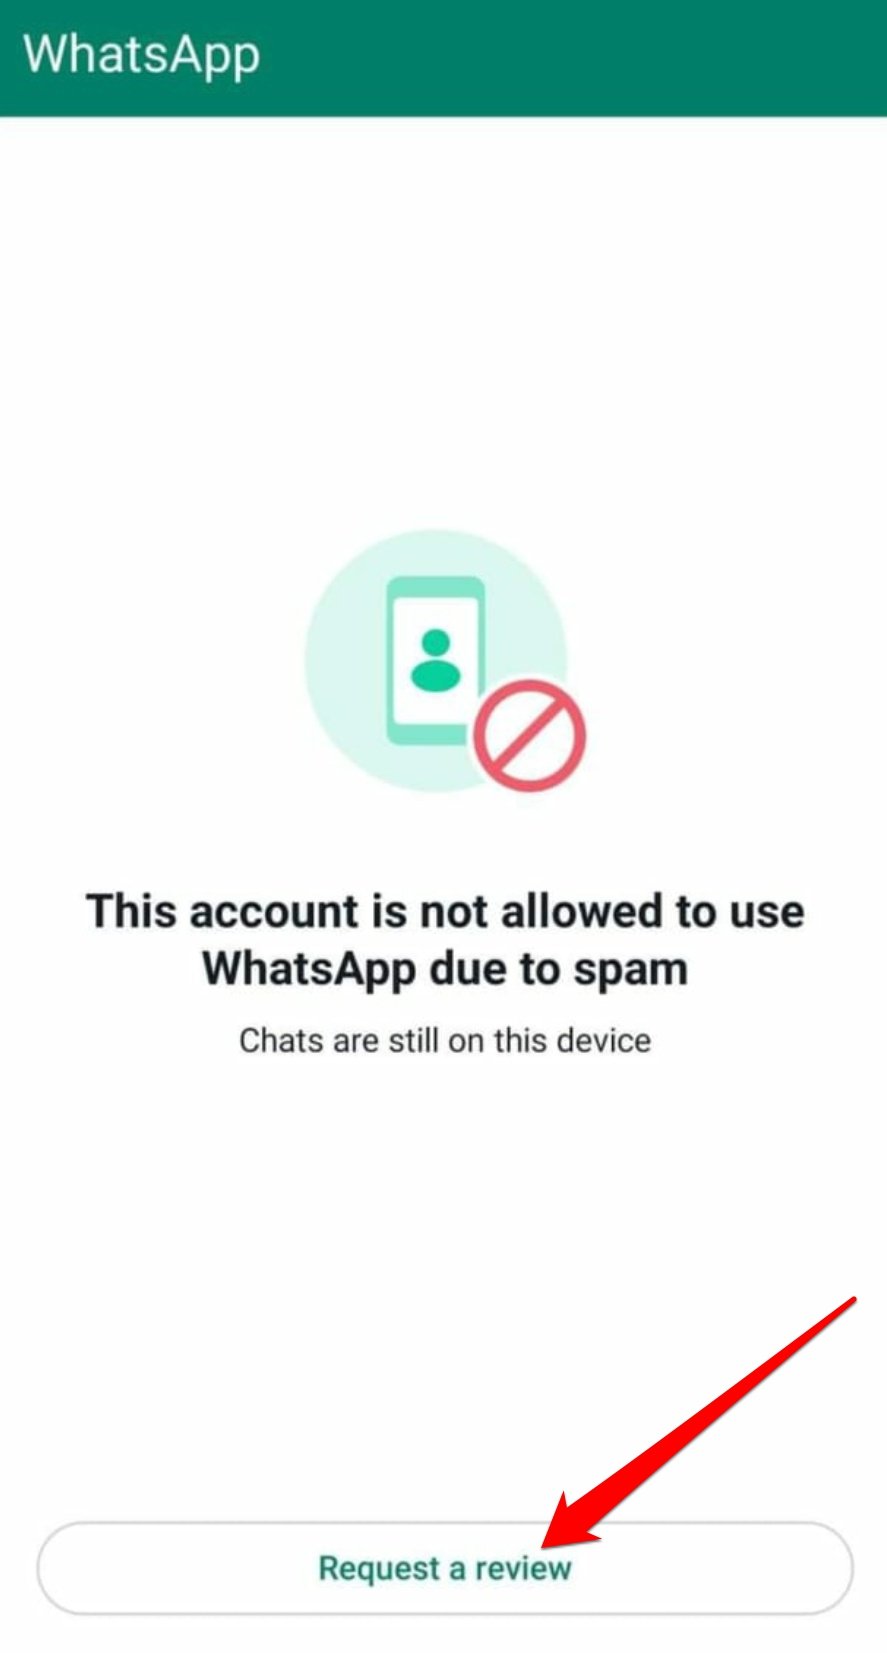 request-a-review-to-revoke-WhatsApp-ban